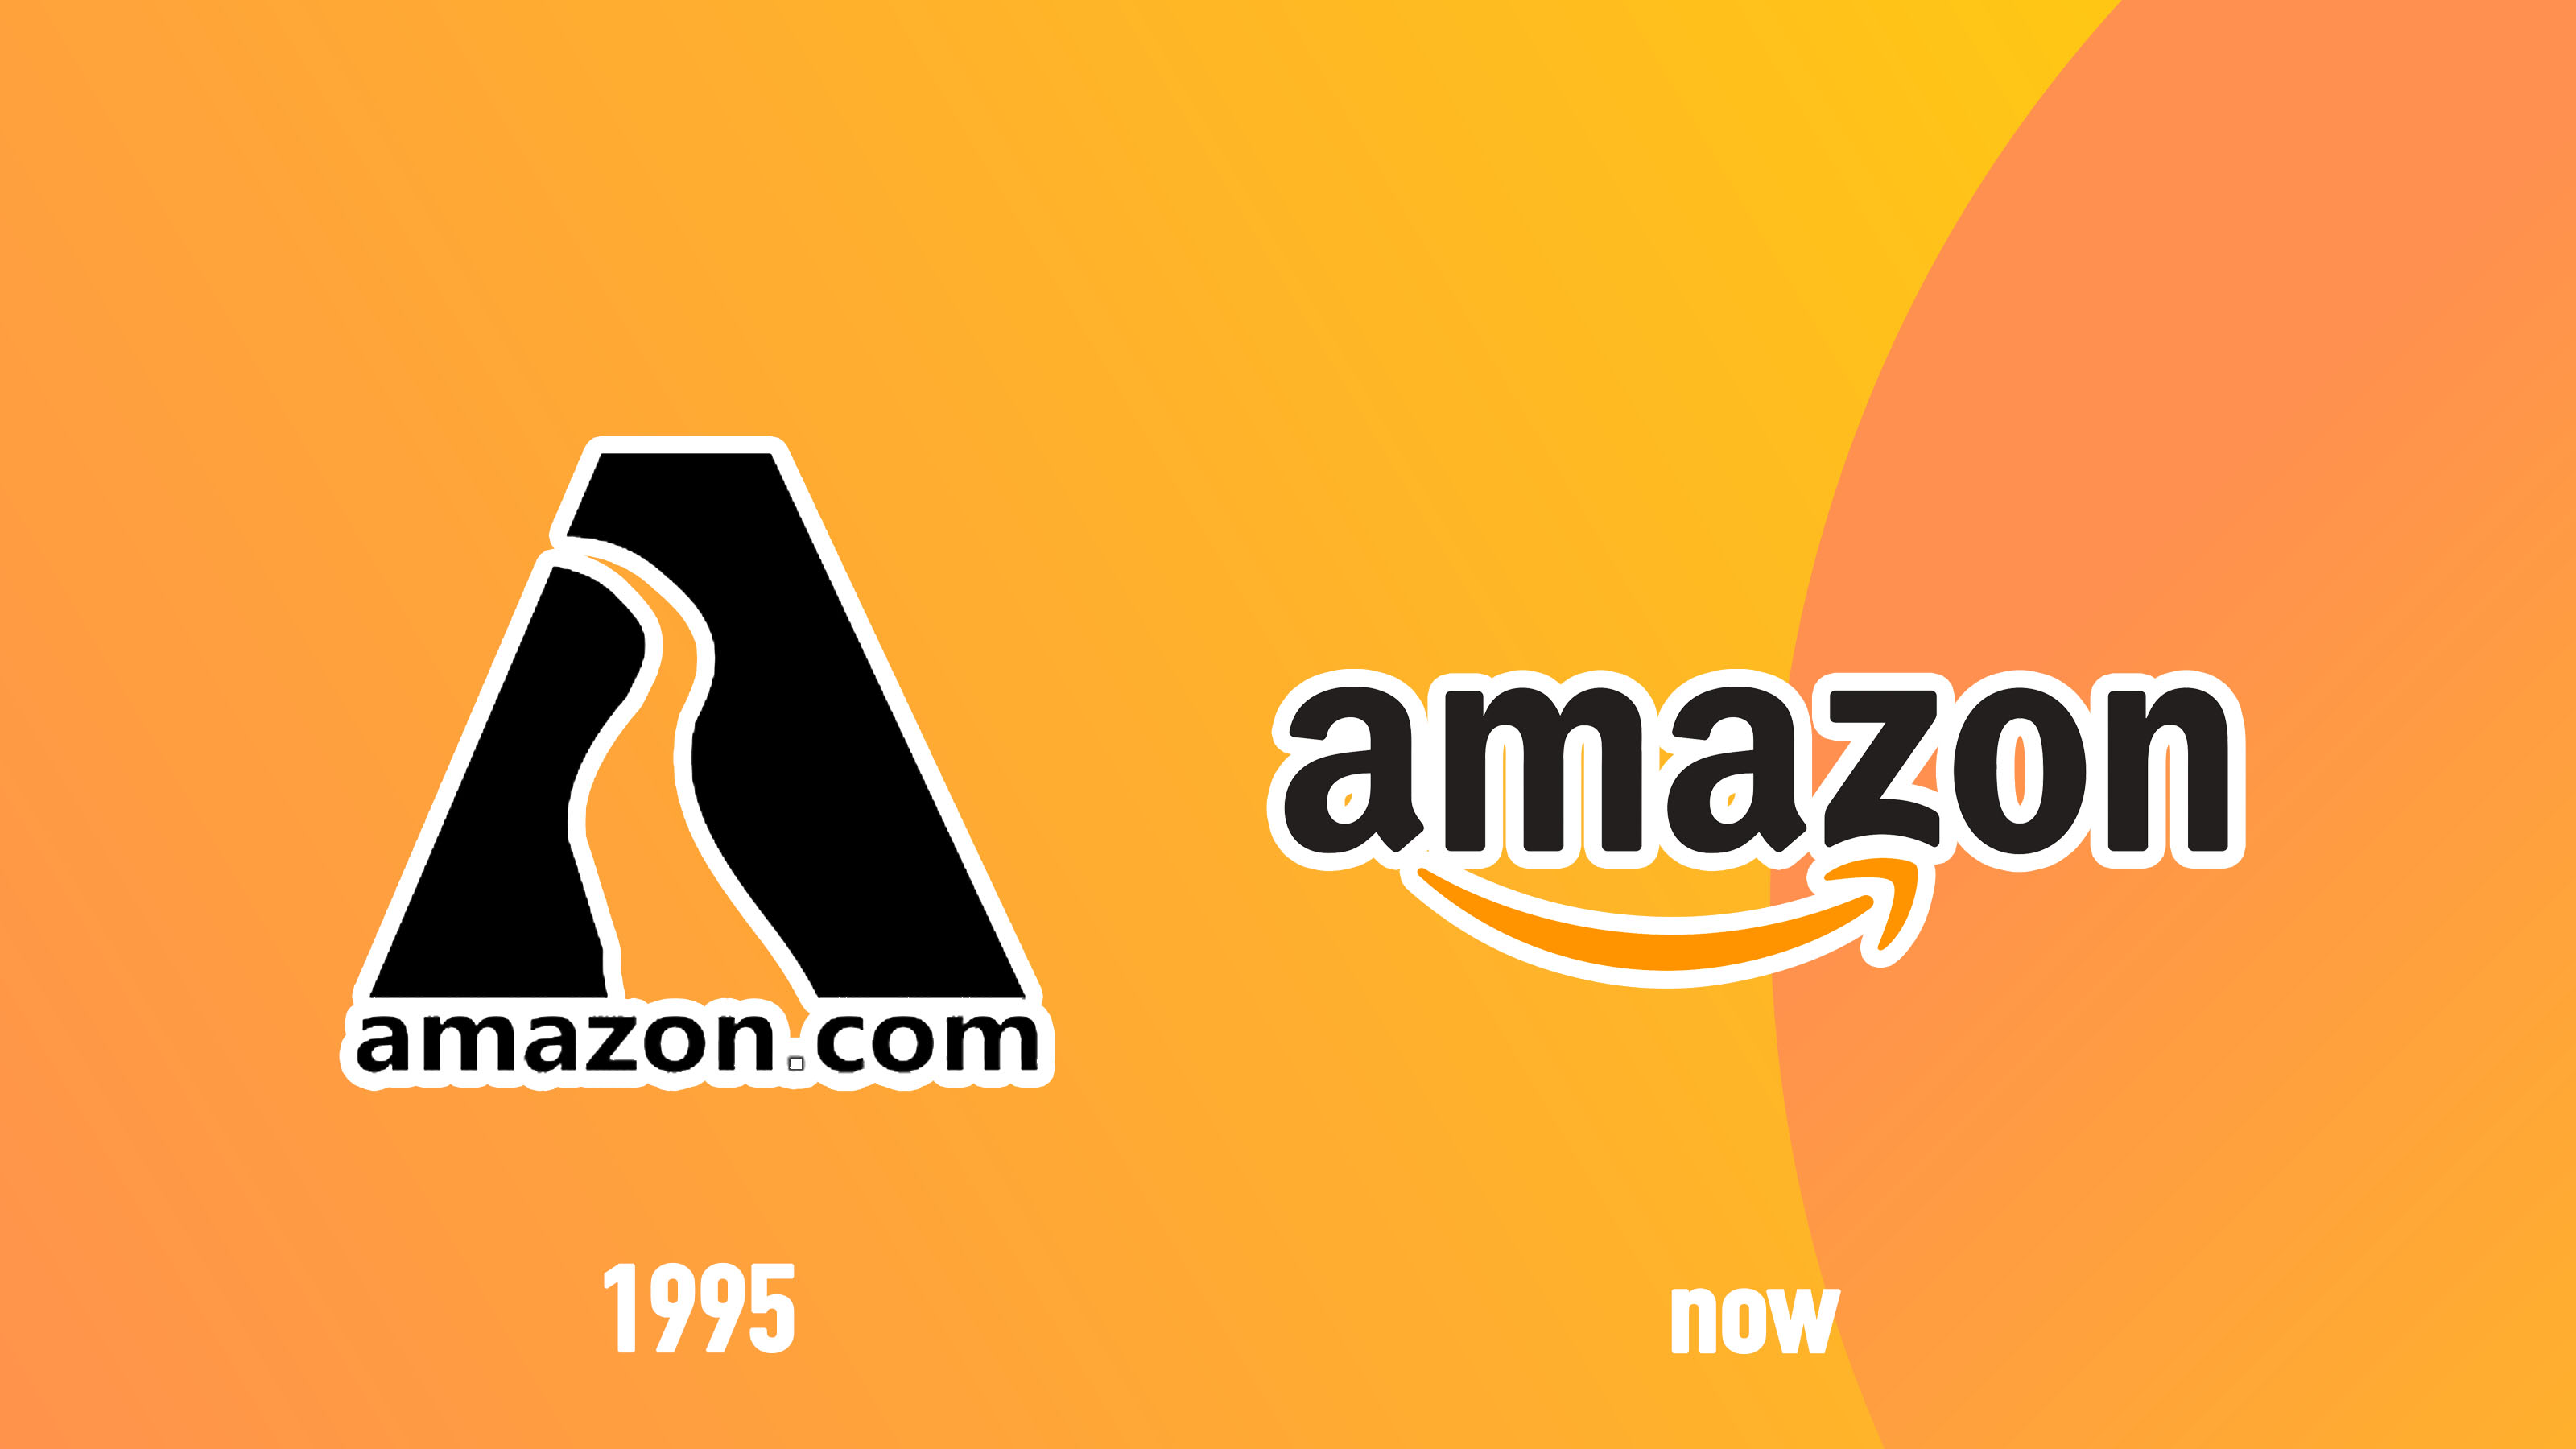 A comparison of the original Amazon logo vs the current one